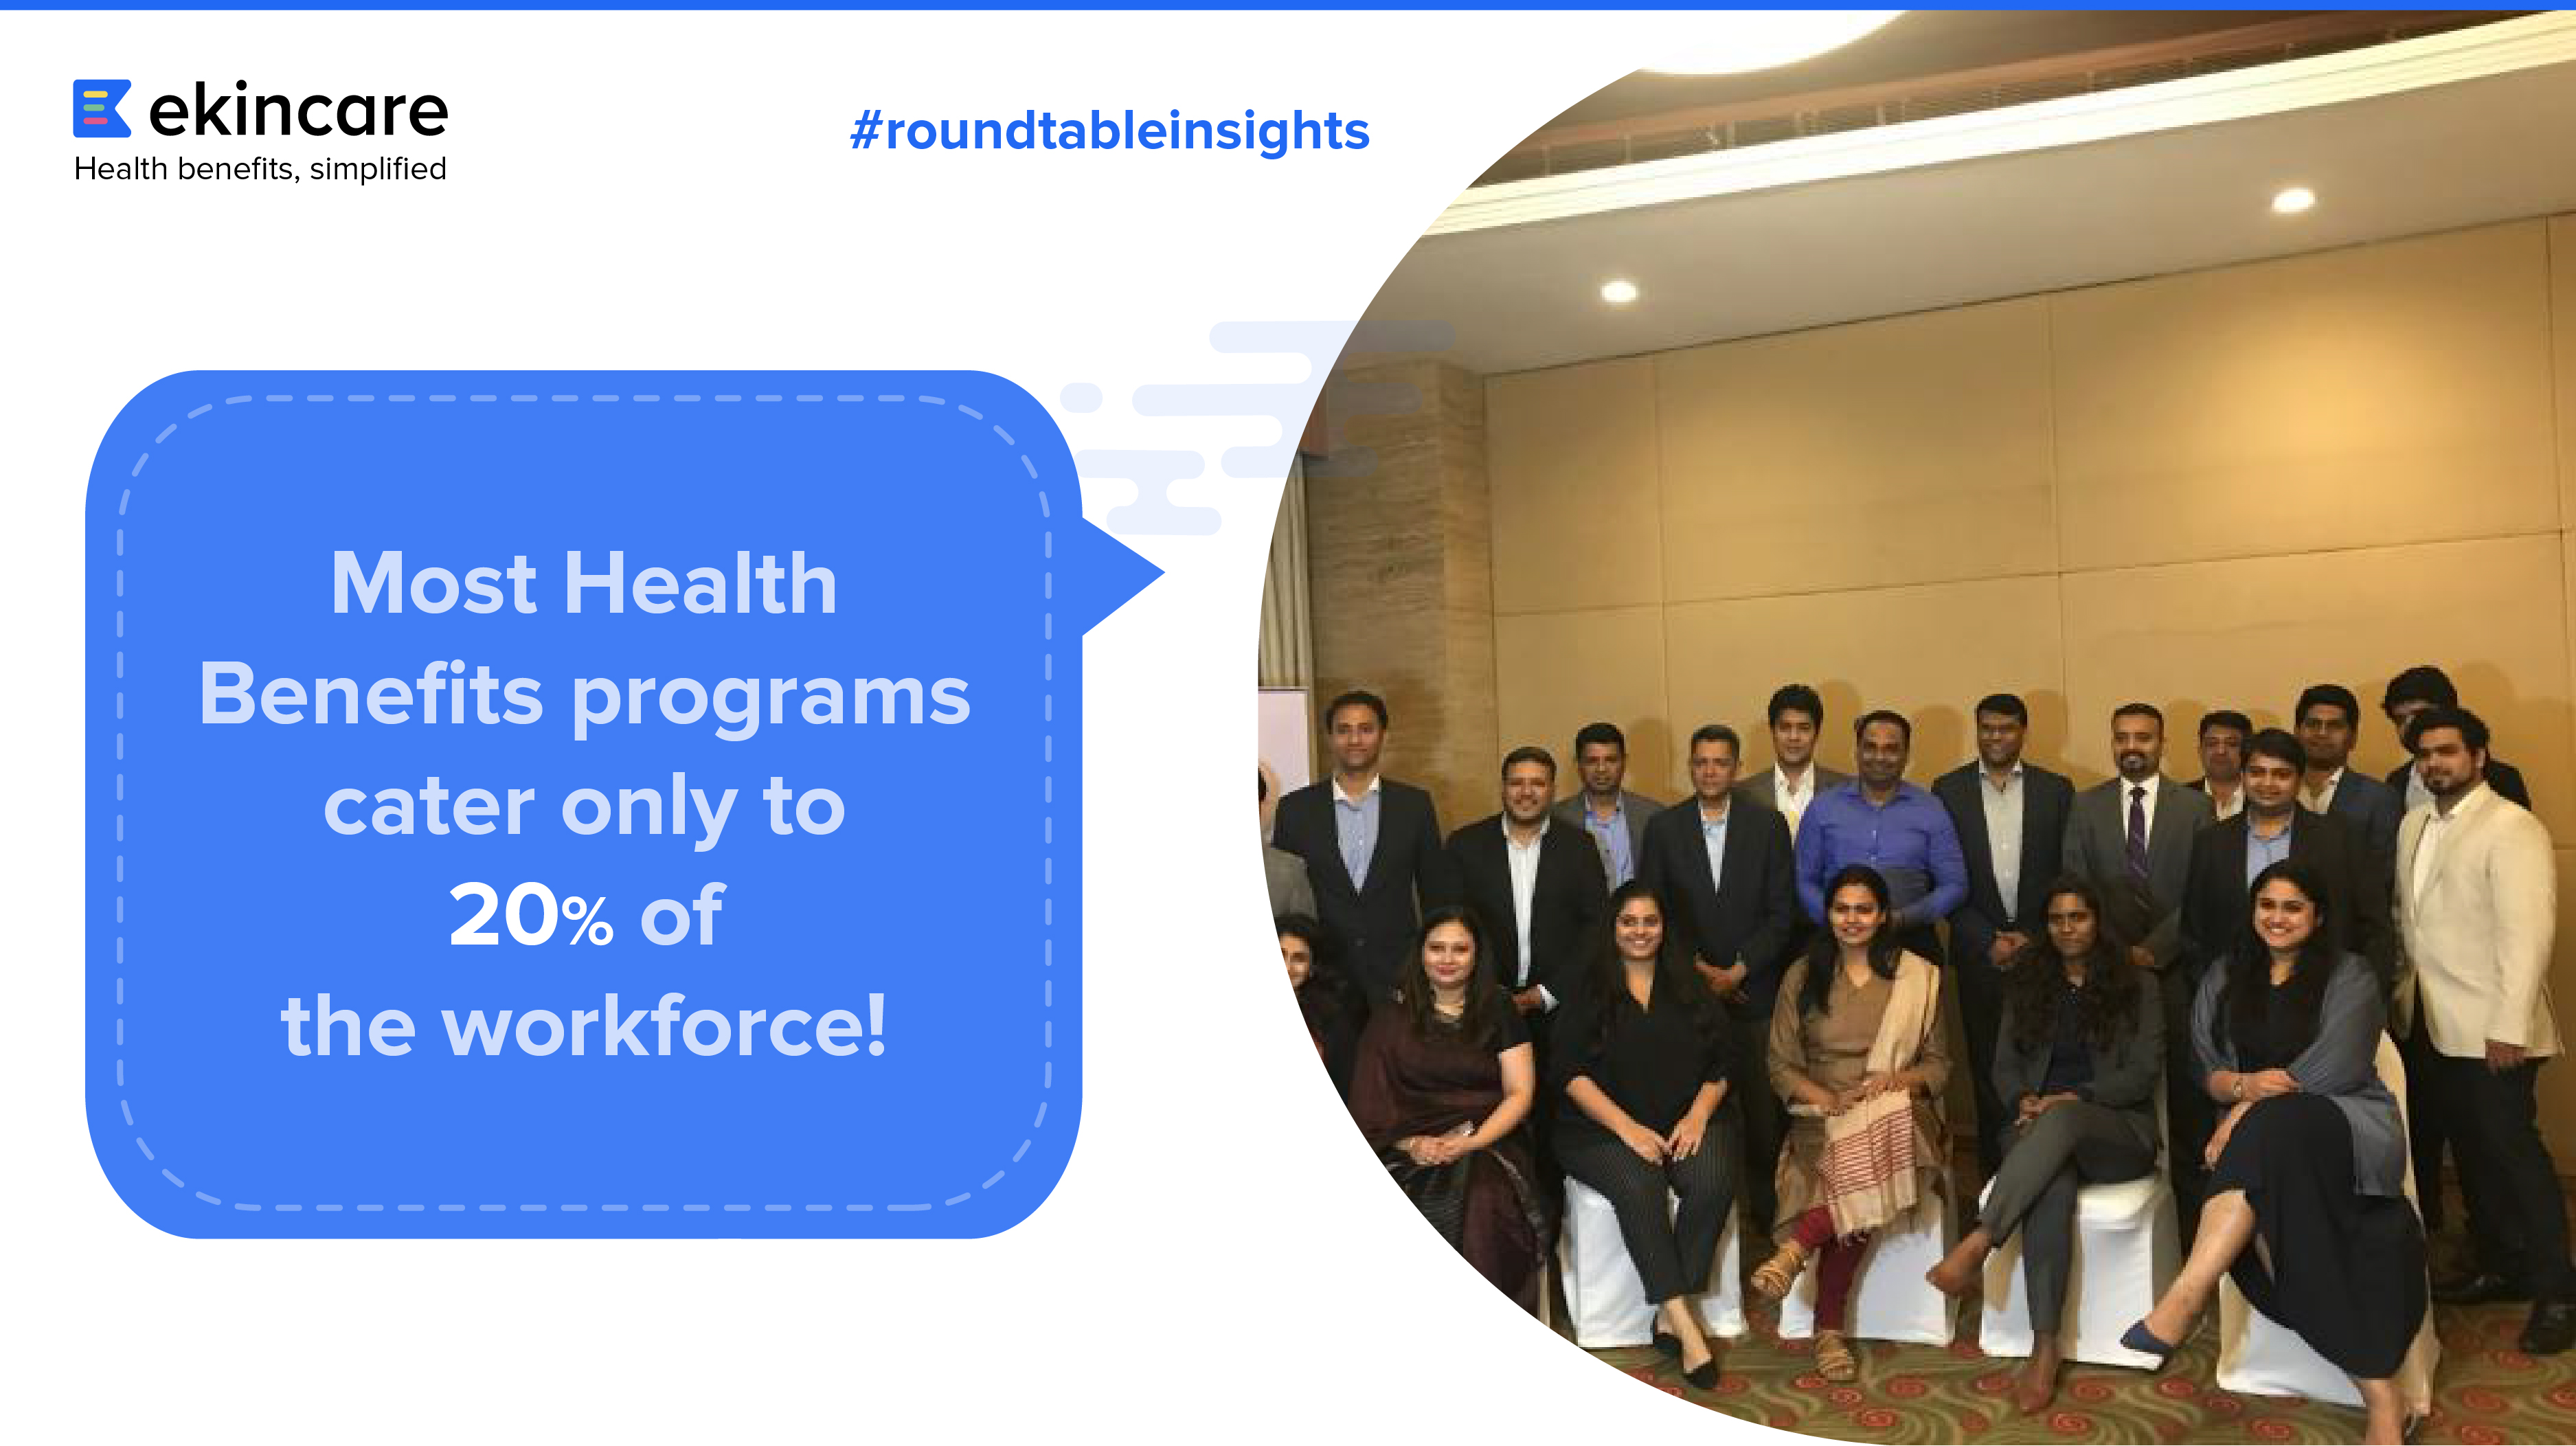 "HR Leadership Series - Roundtable Insights, Mumbai"